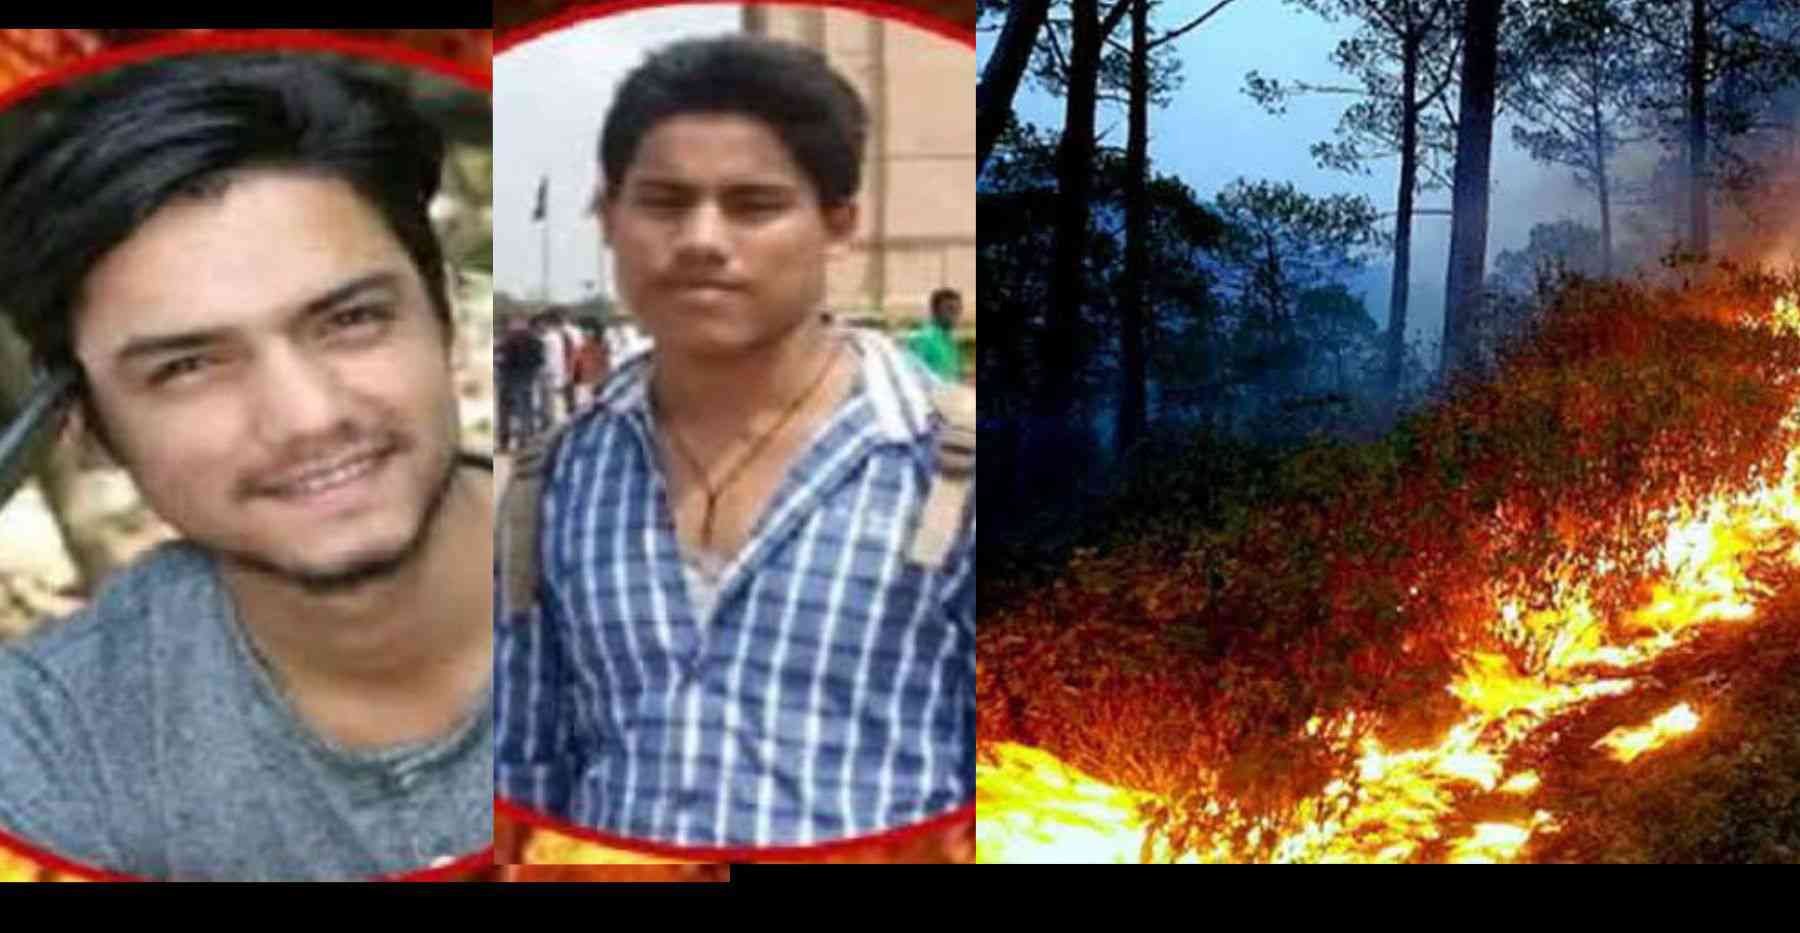 Uttarakhand news: Kuldeep Nautiyal & Vikas Rawat, come from Delhi to pauri garhwal died in extinguishing the forest fire. Pauri Garhwal forest fire